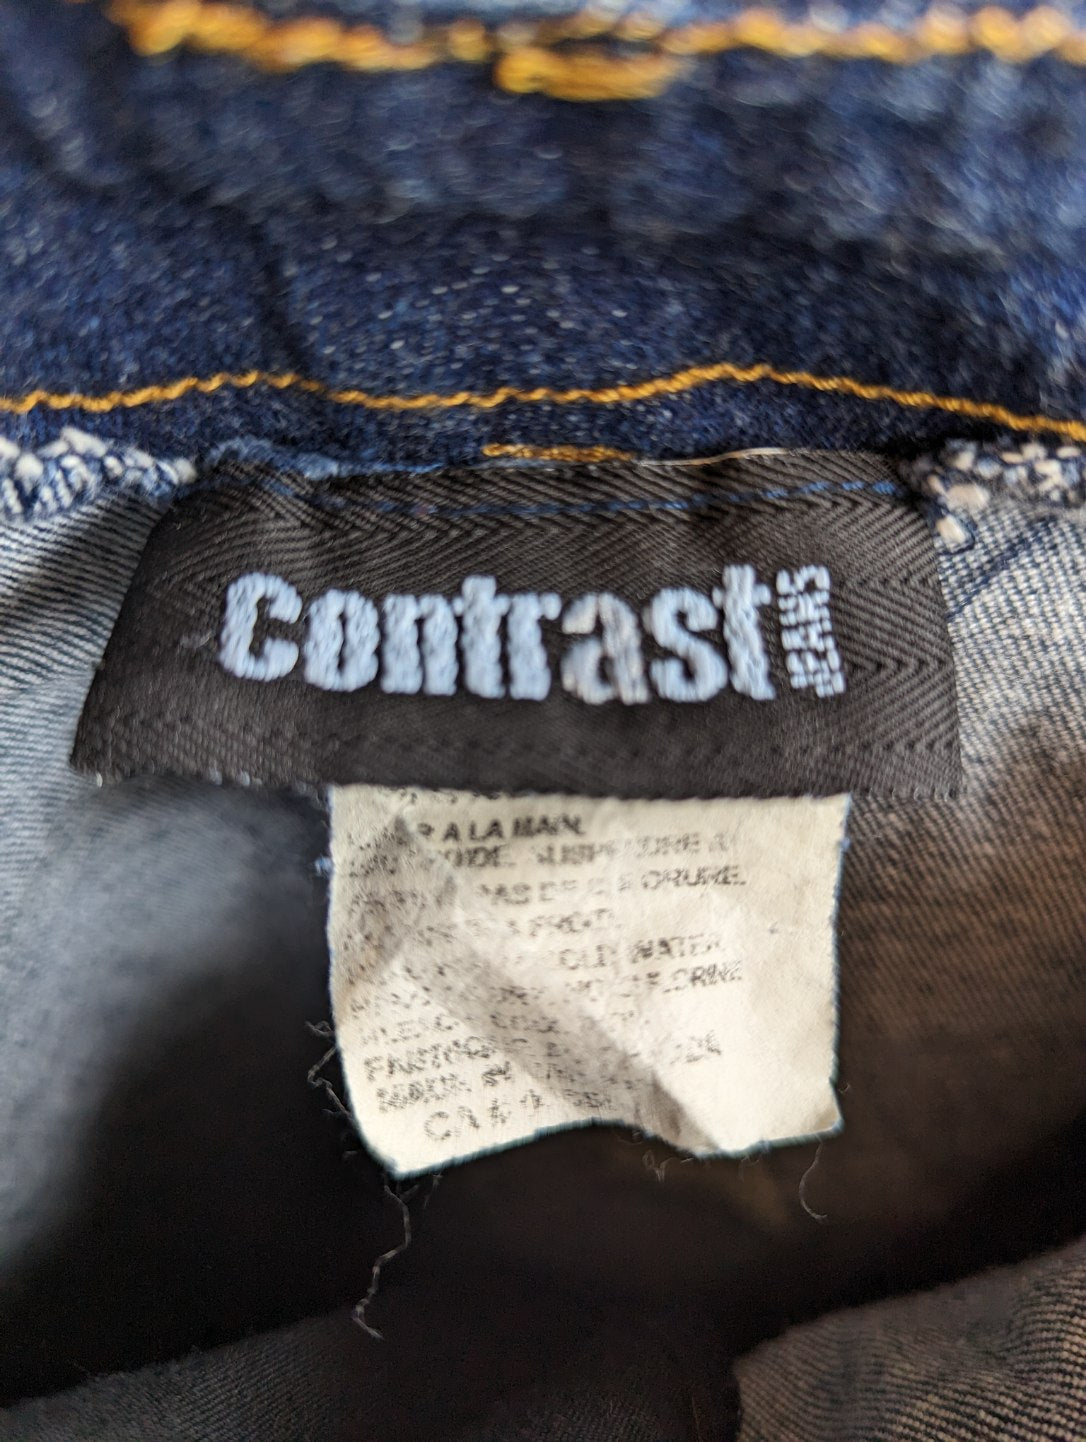 1990s Contrast Jeans Denim Maxi Skirt